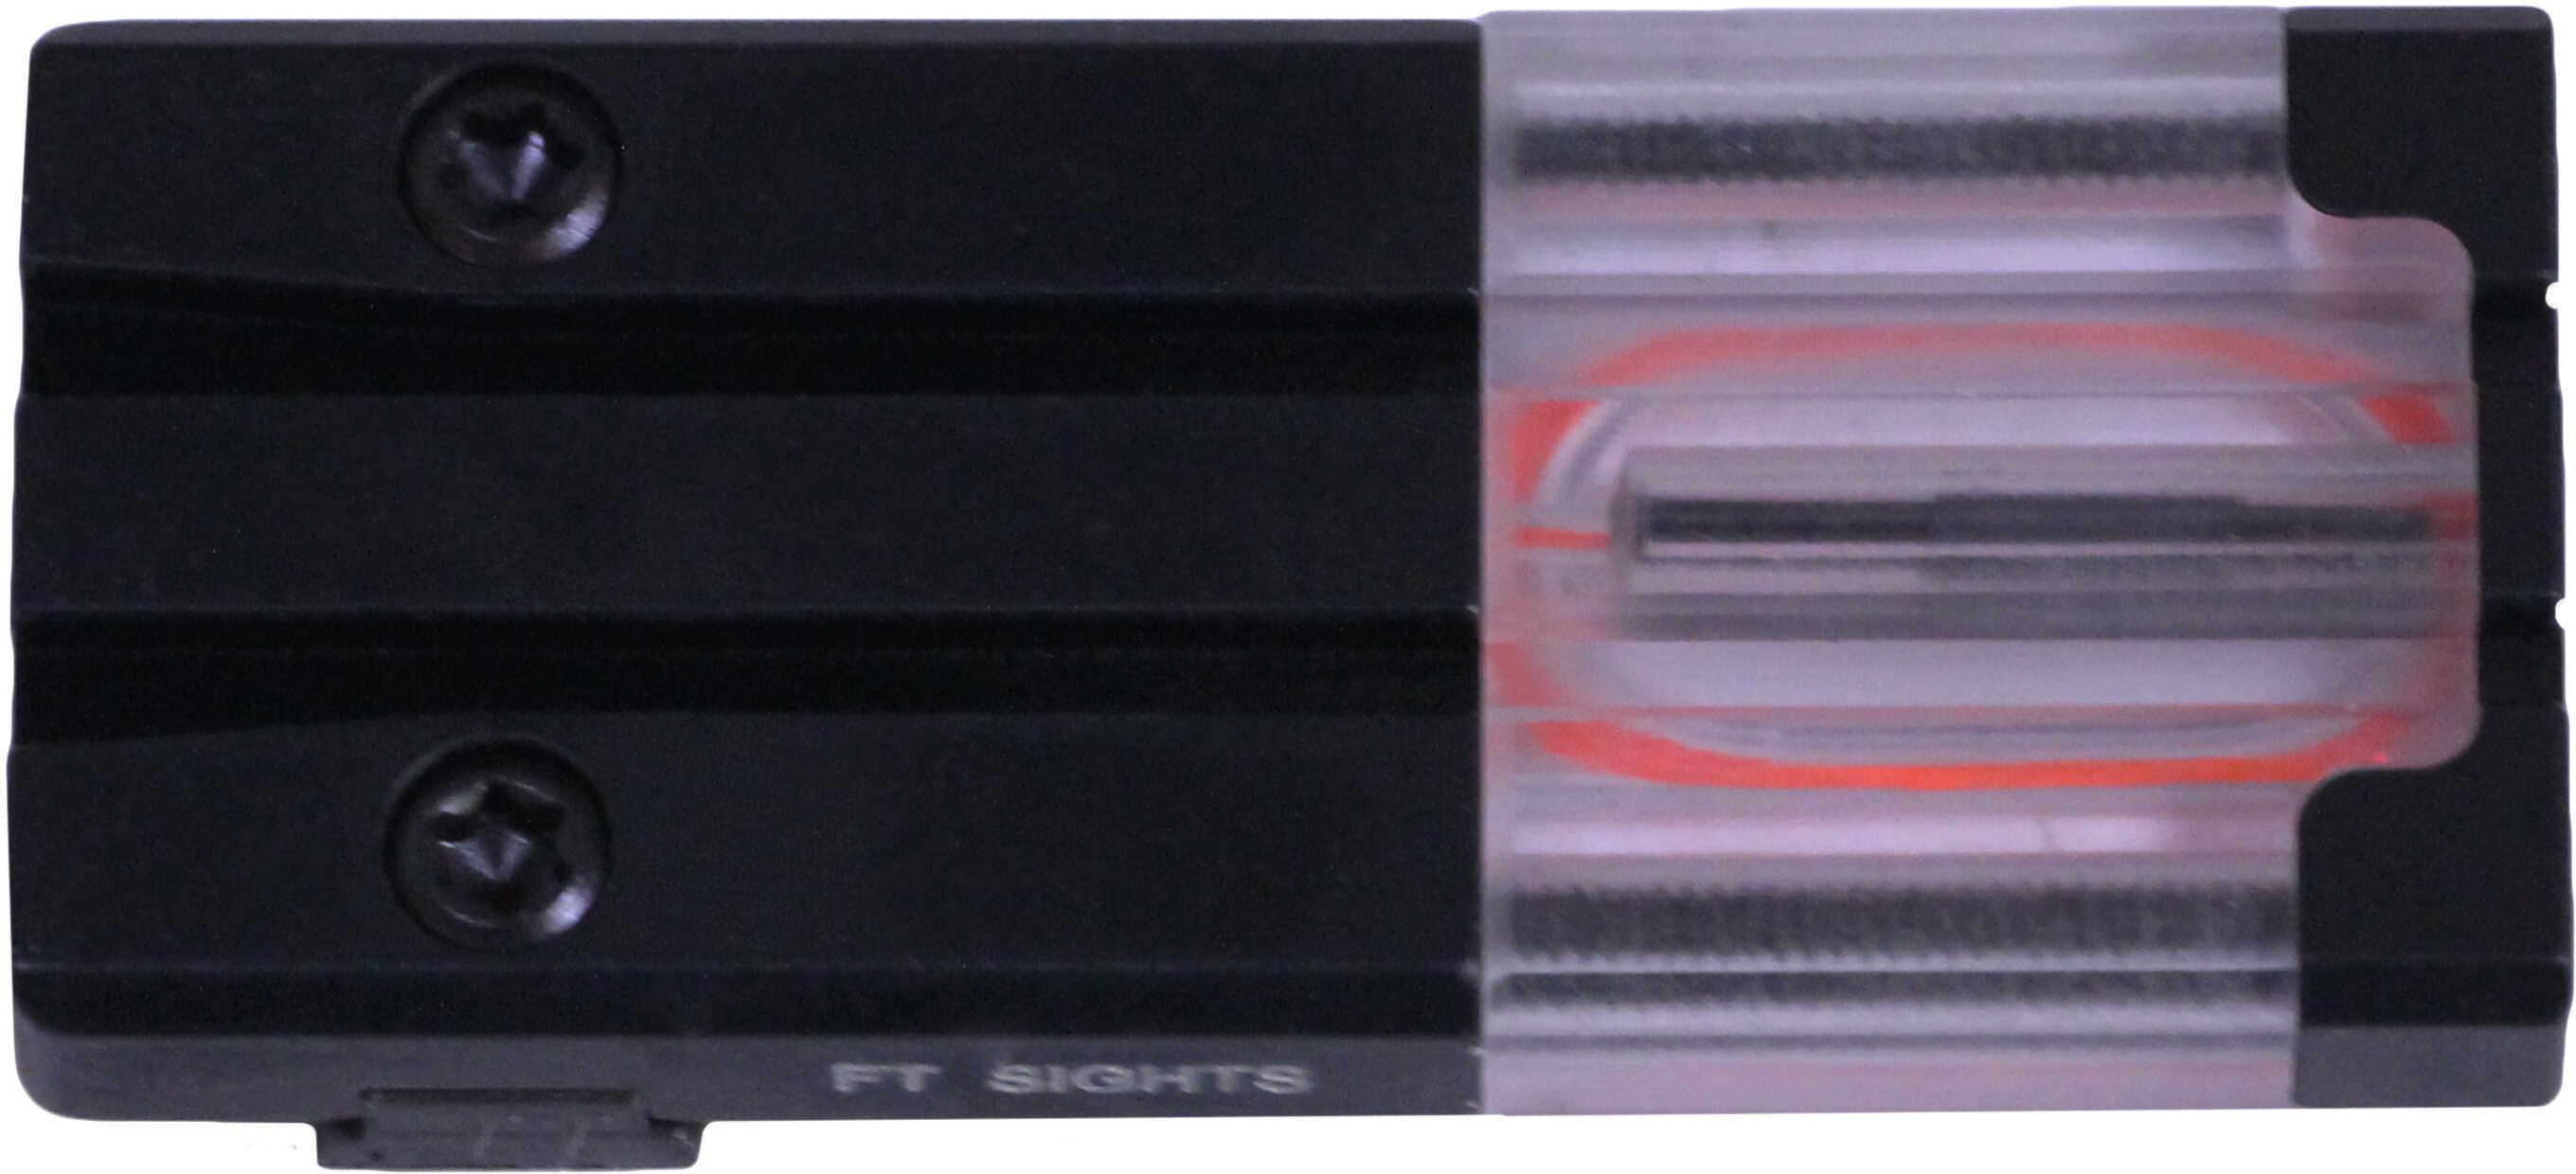 MEPROLIGHT Fiber Tritium Red Circle Dot Rear Sight for Glock